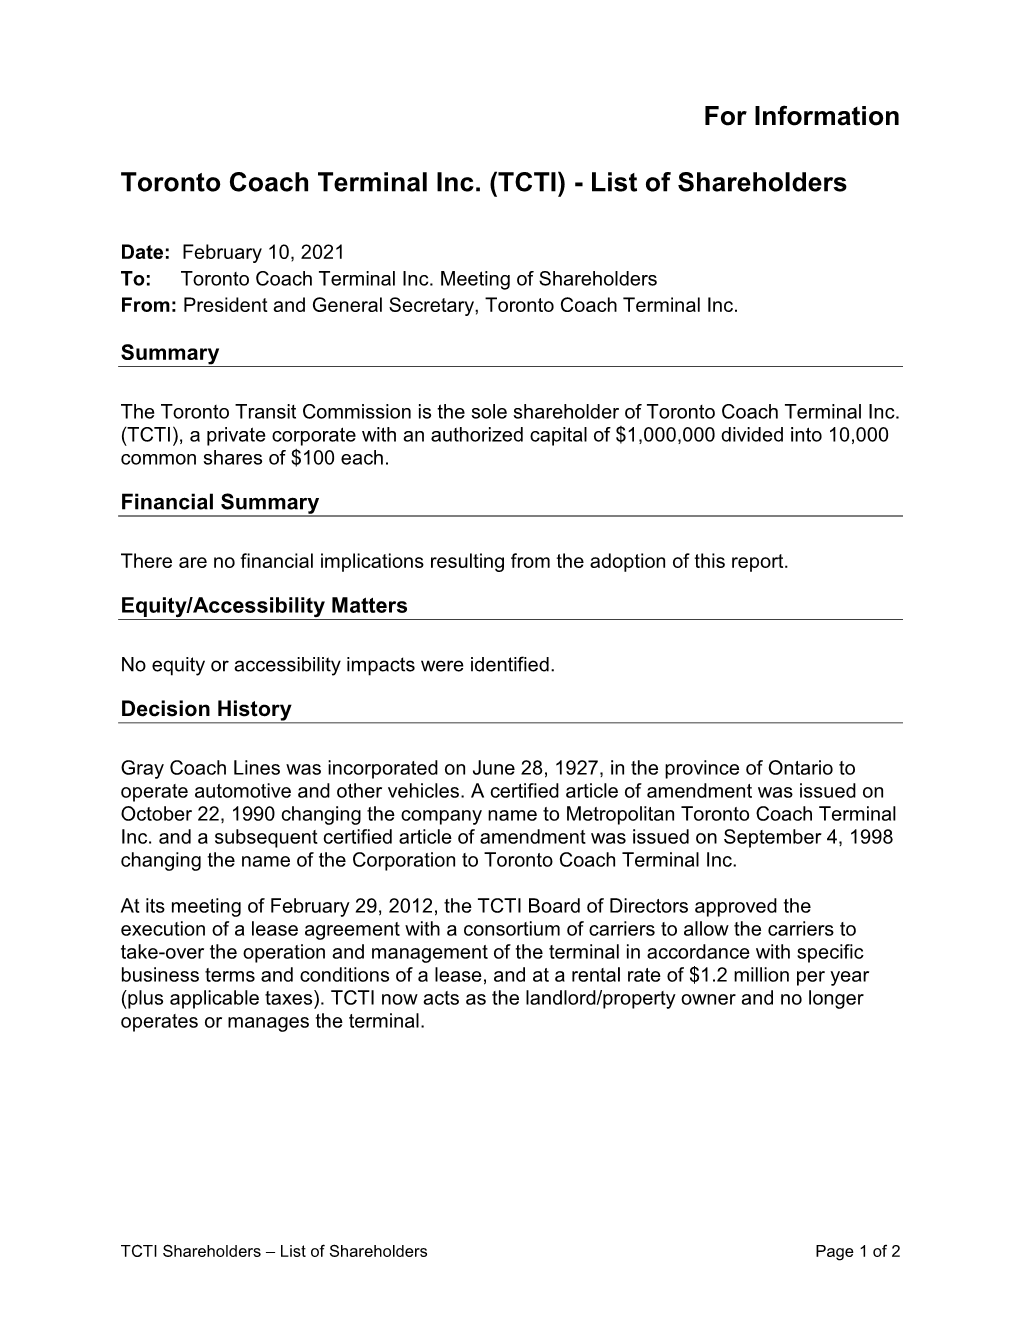 Toronto Coach Terminal Inc. (TCTI) - List of Shareholders